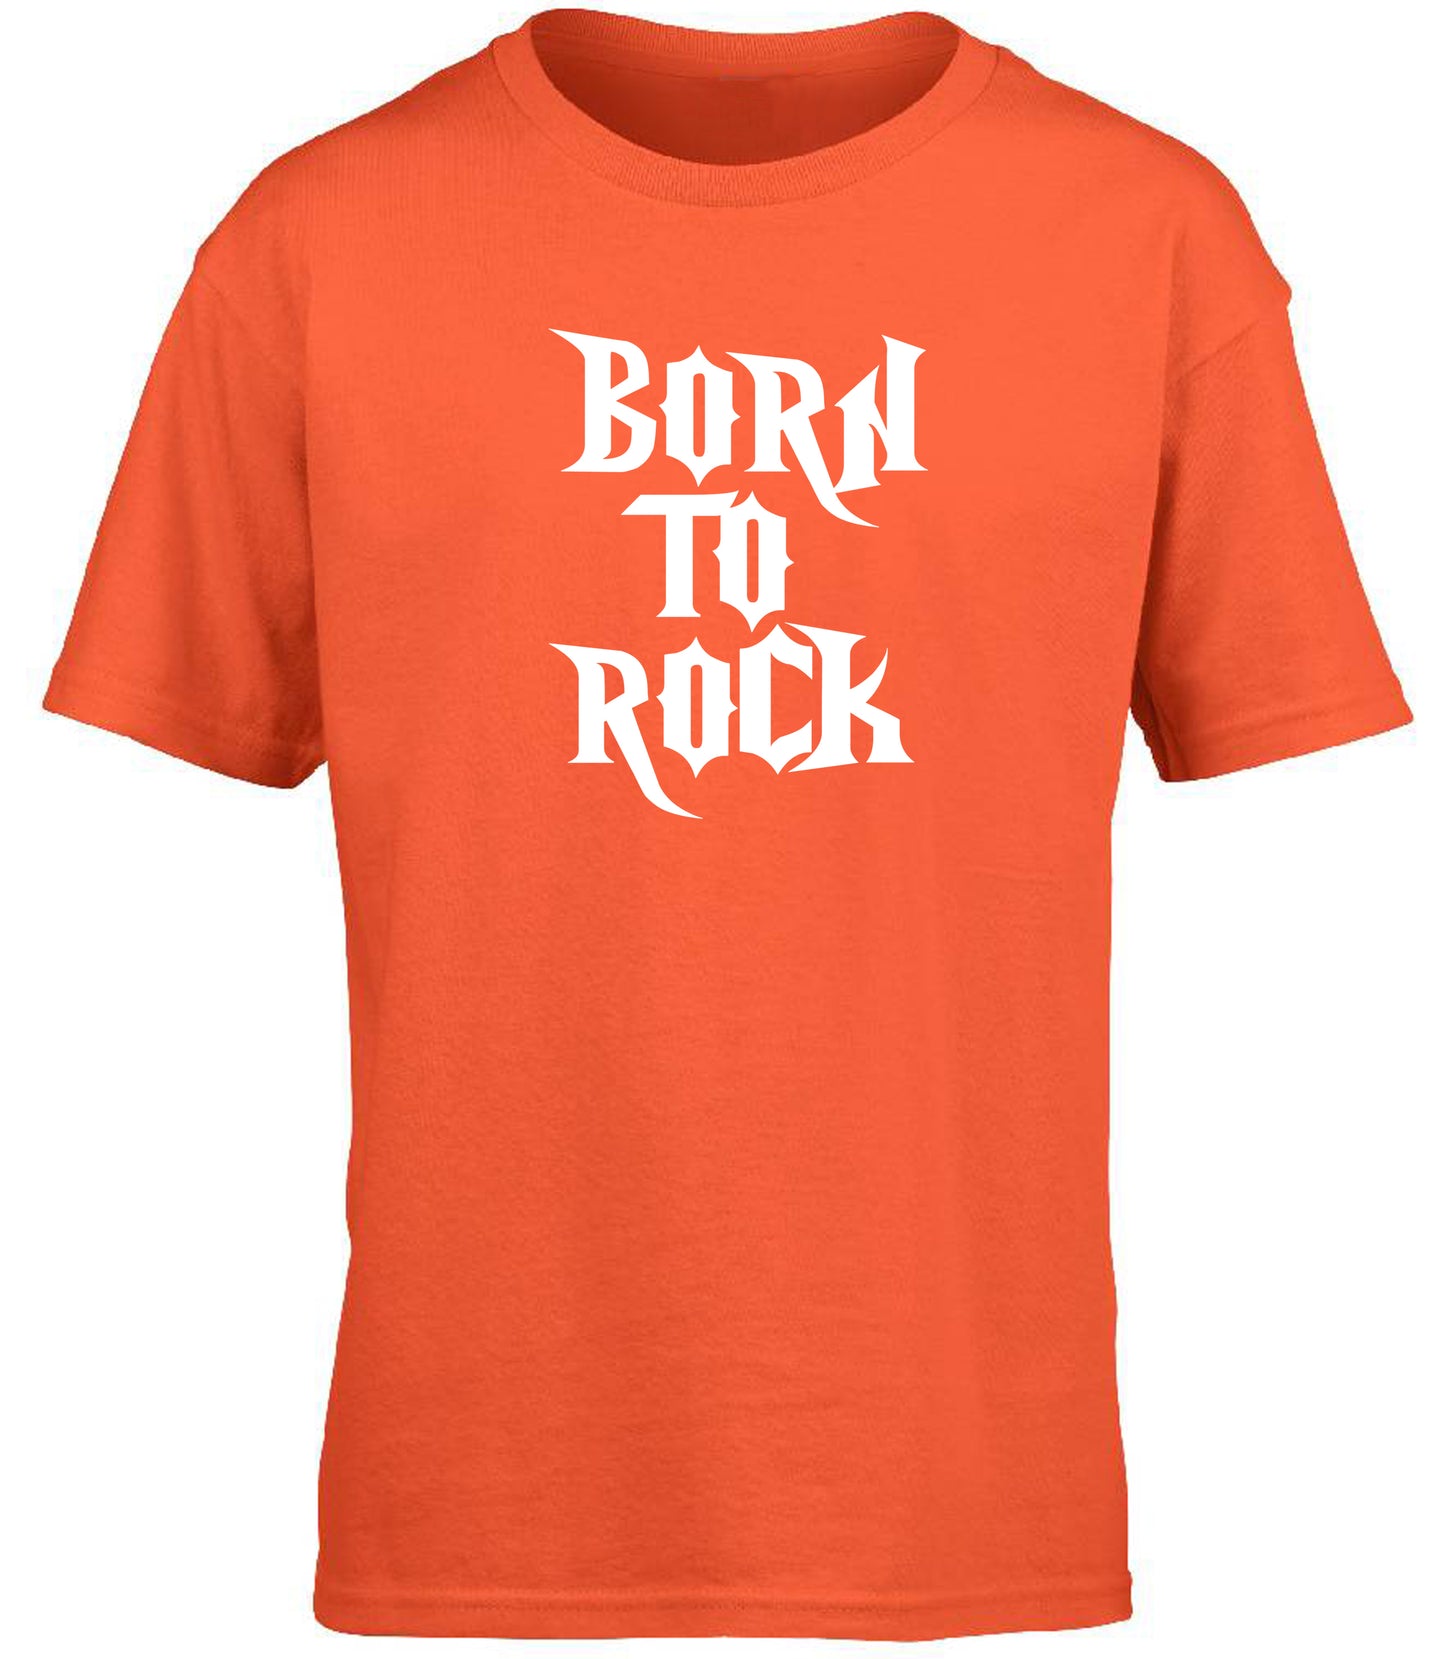 Born to rock children's T-shirt